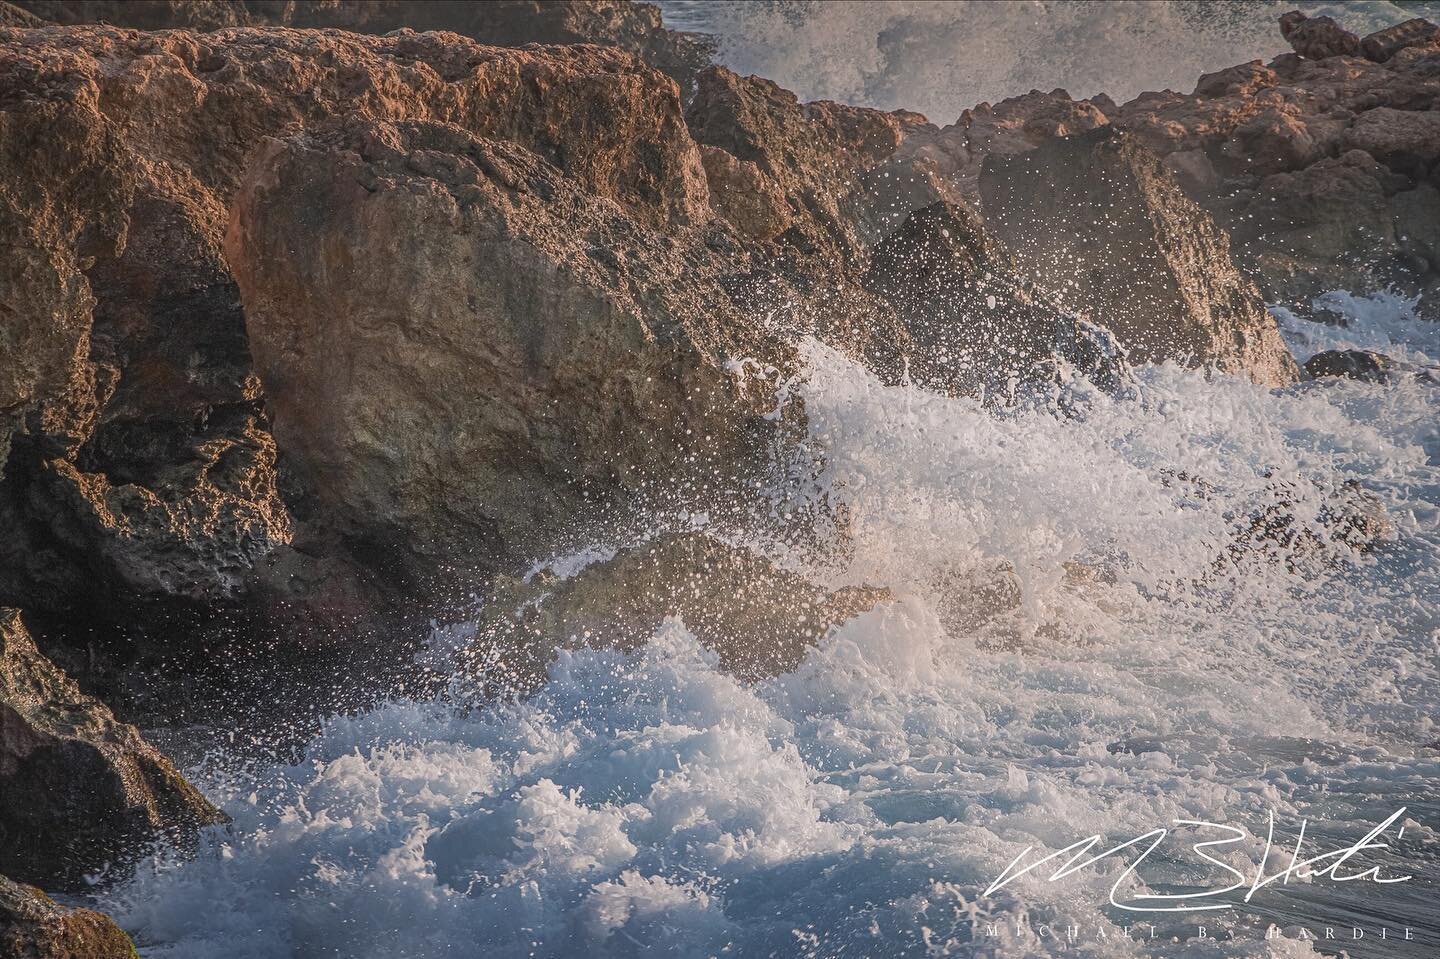 Elemental

Pacific waves crash against volcanic rock on the island of Oahu, Hawaii.